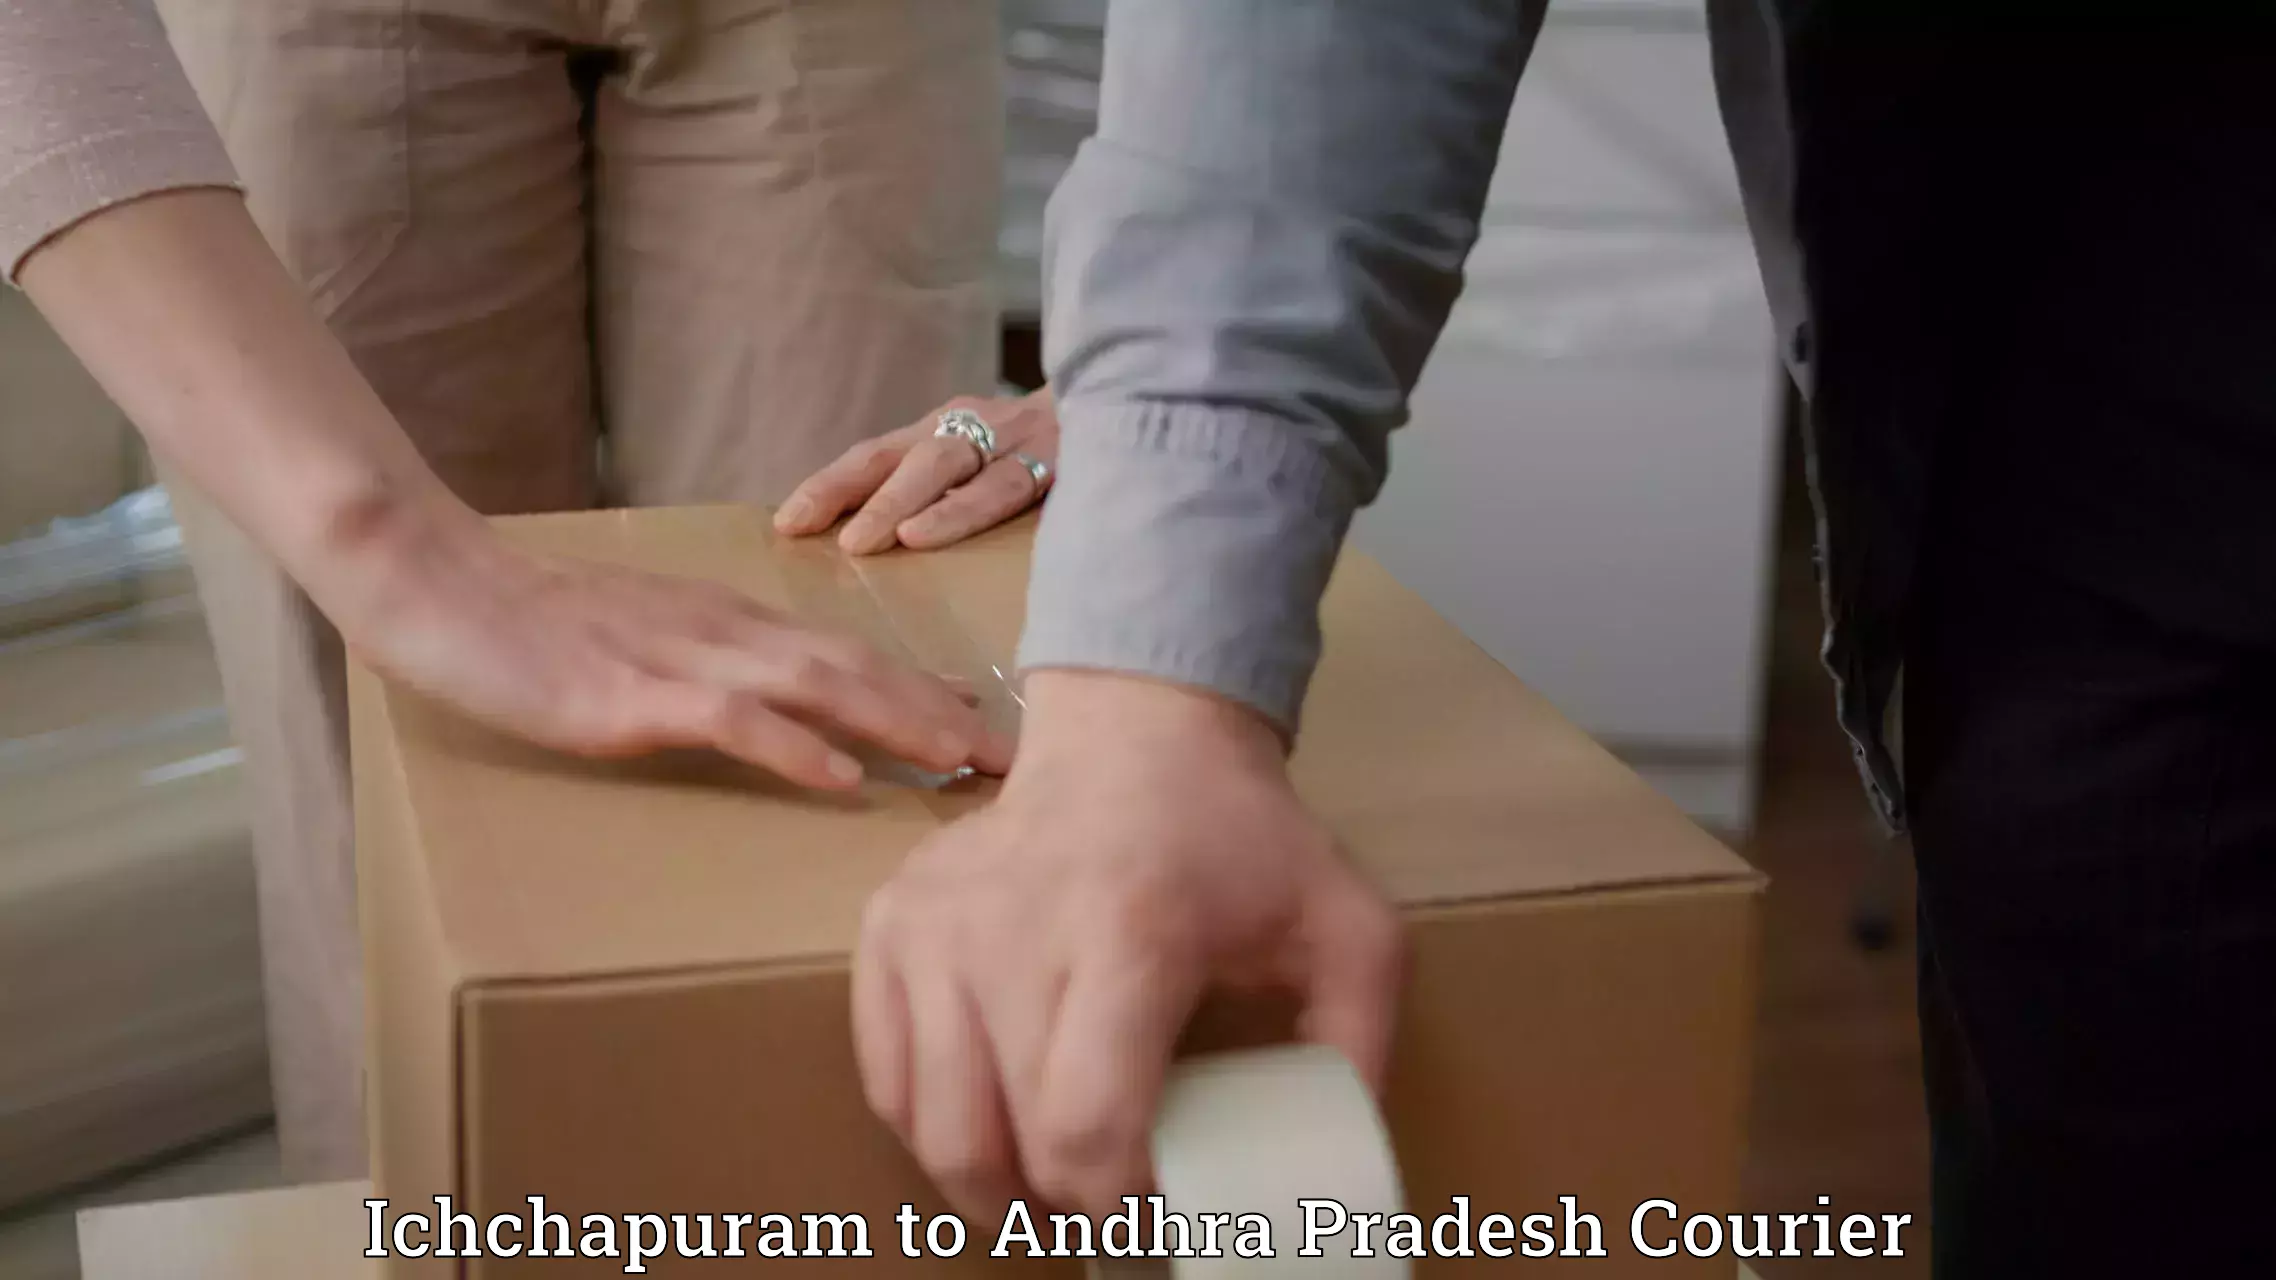 Express delivery solutions Ichchapuram to East Godavari